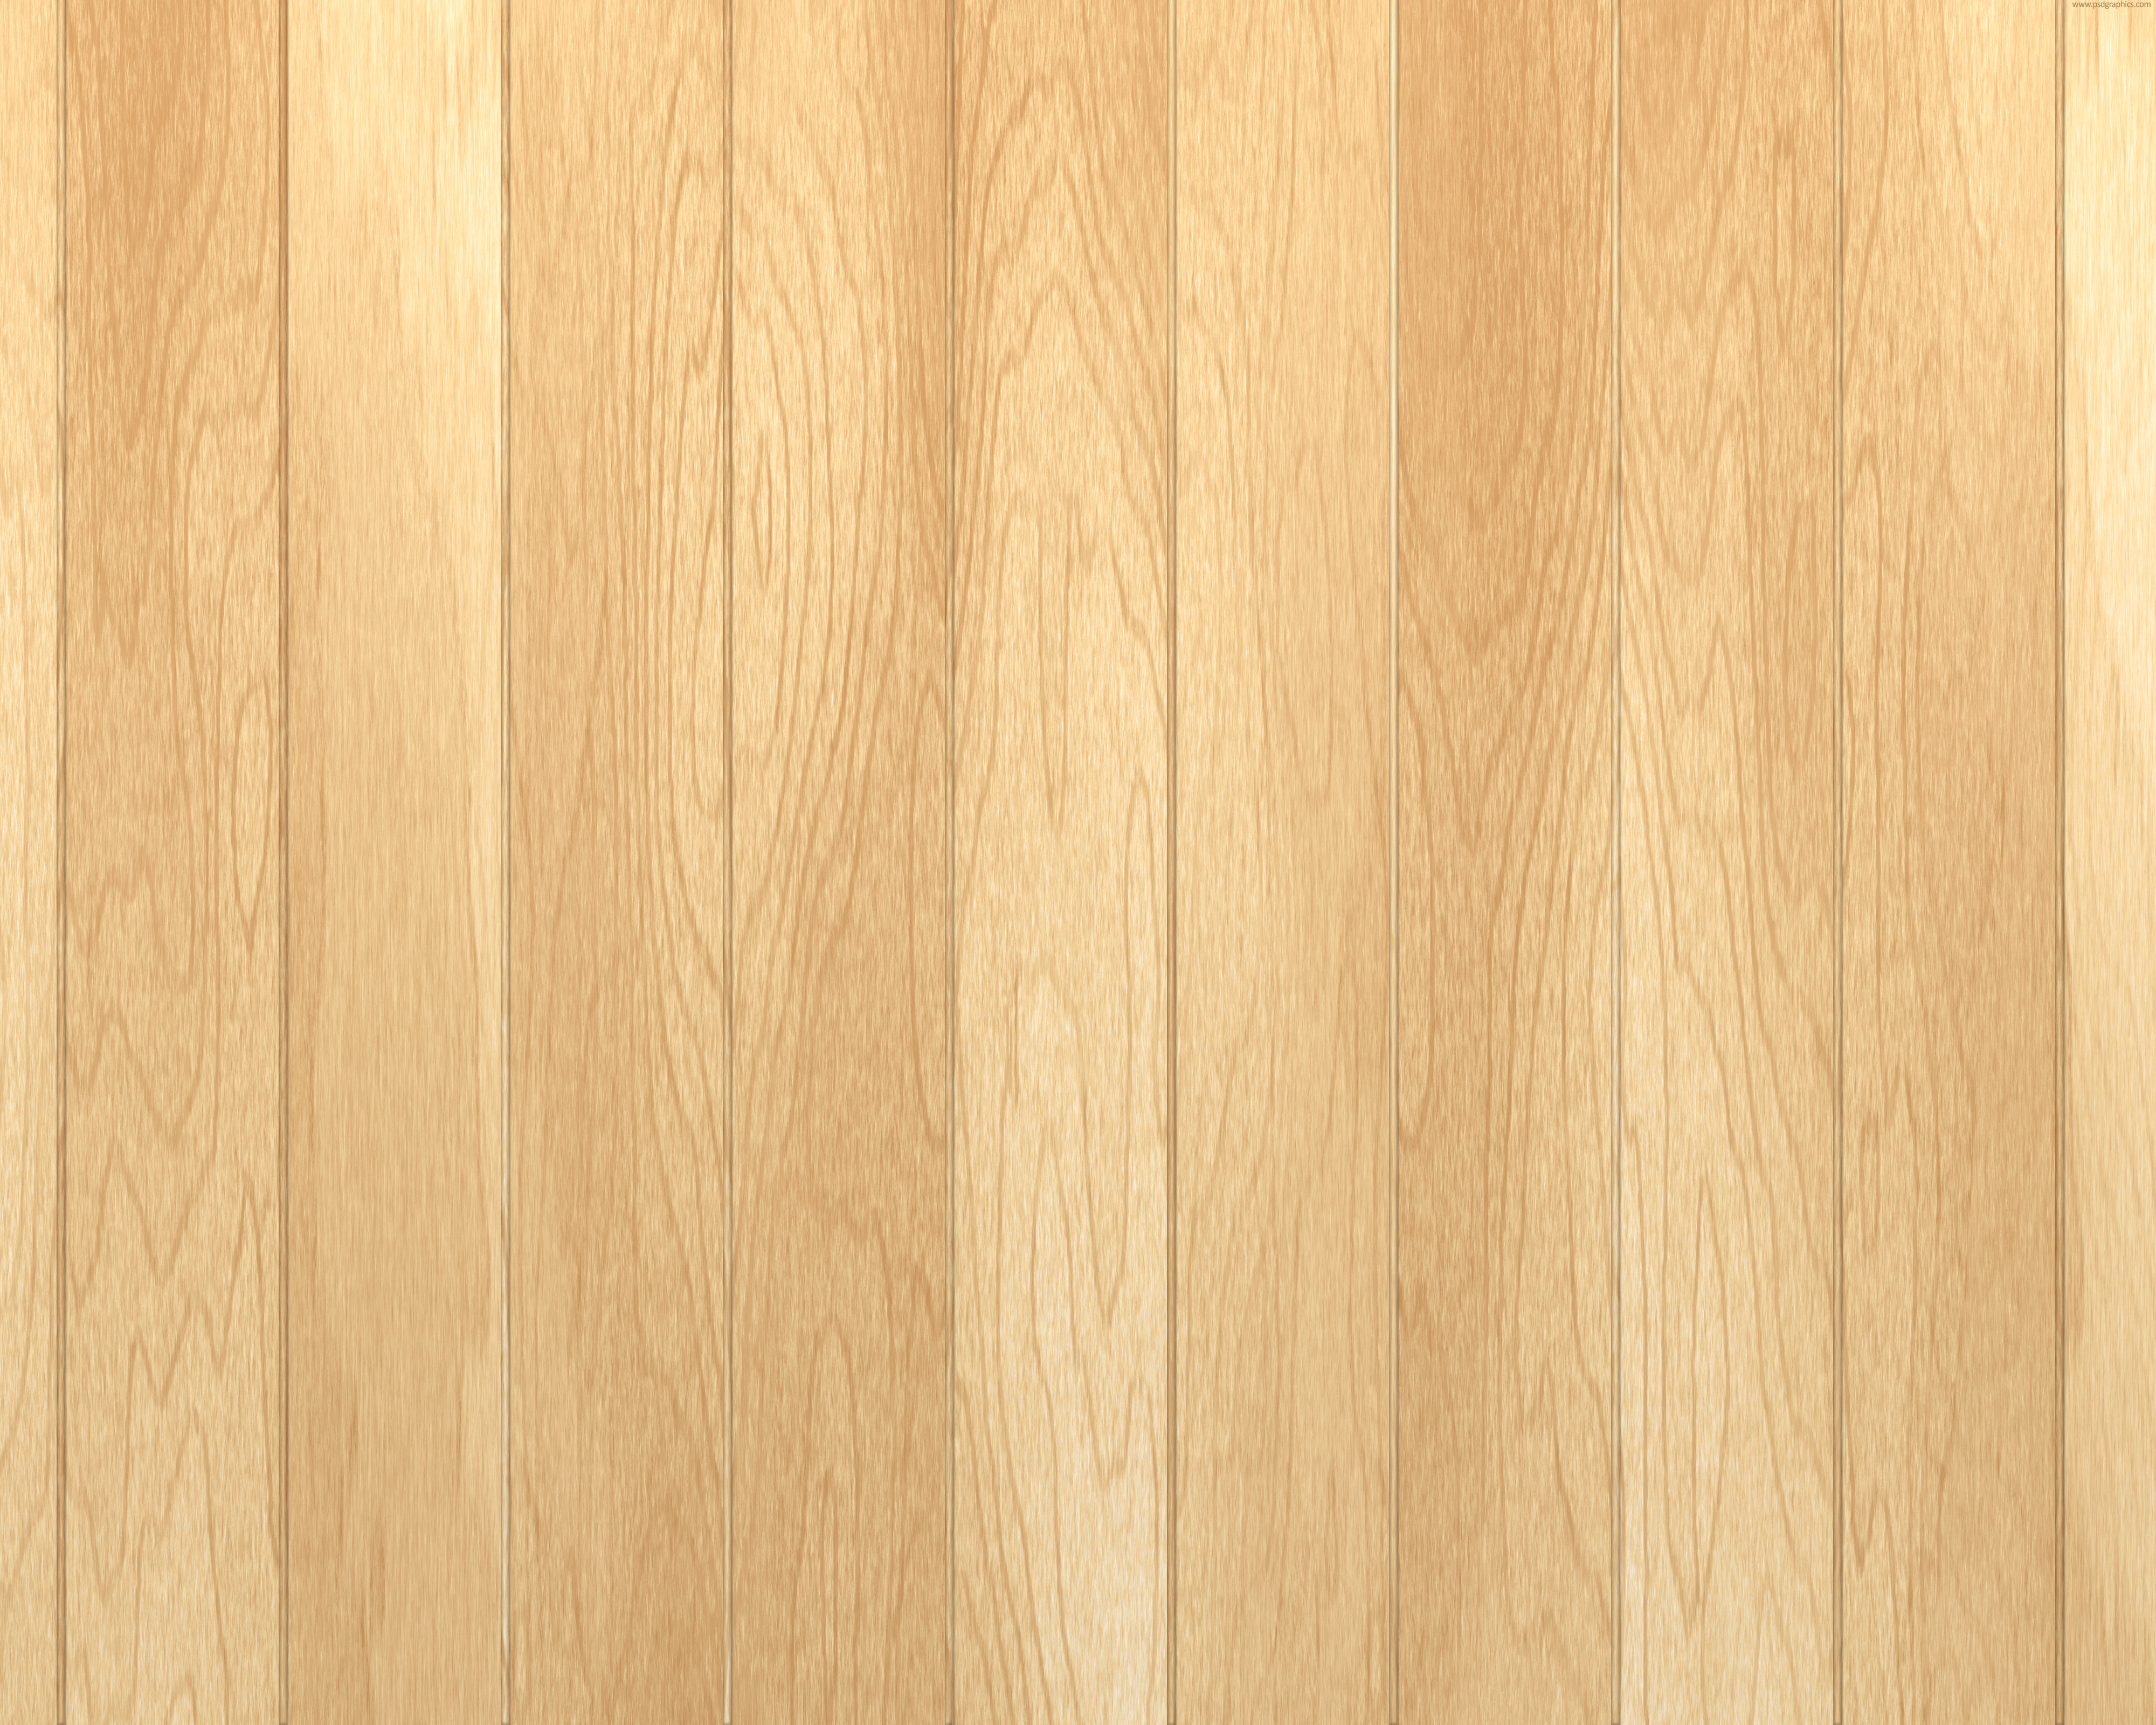 Oak wood background PSDGraphics